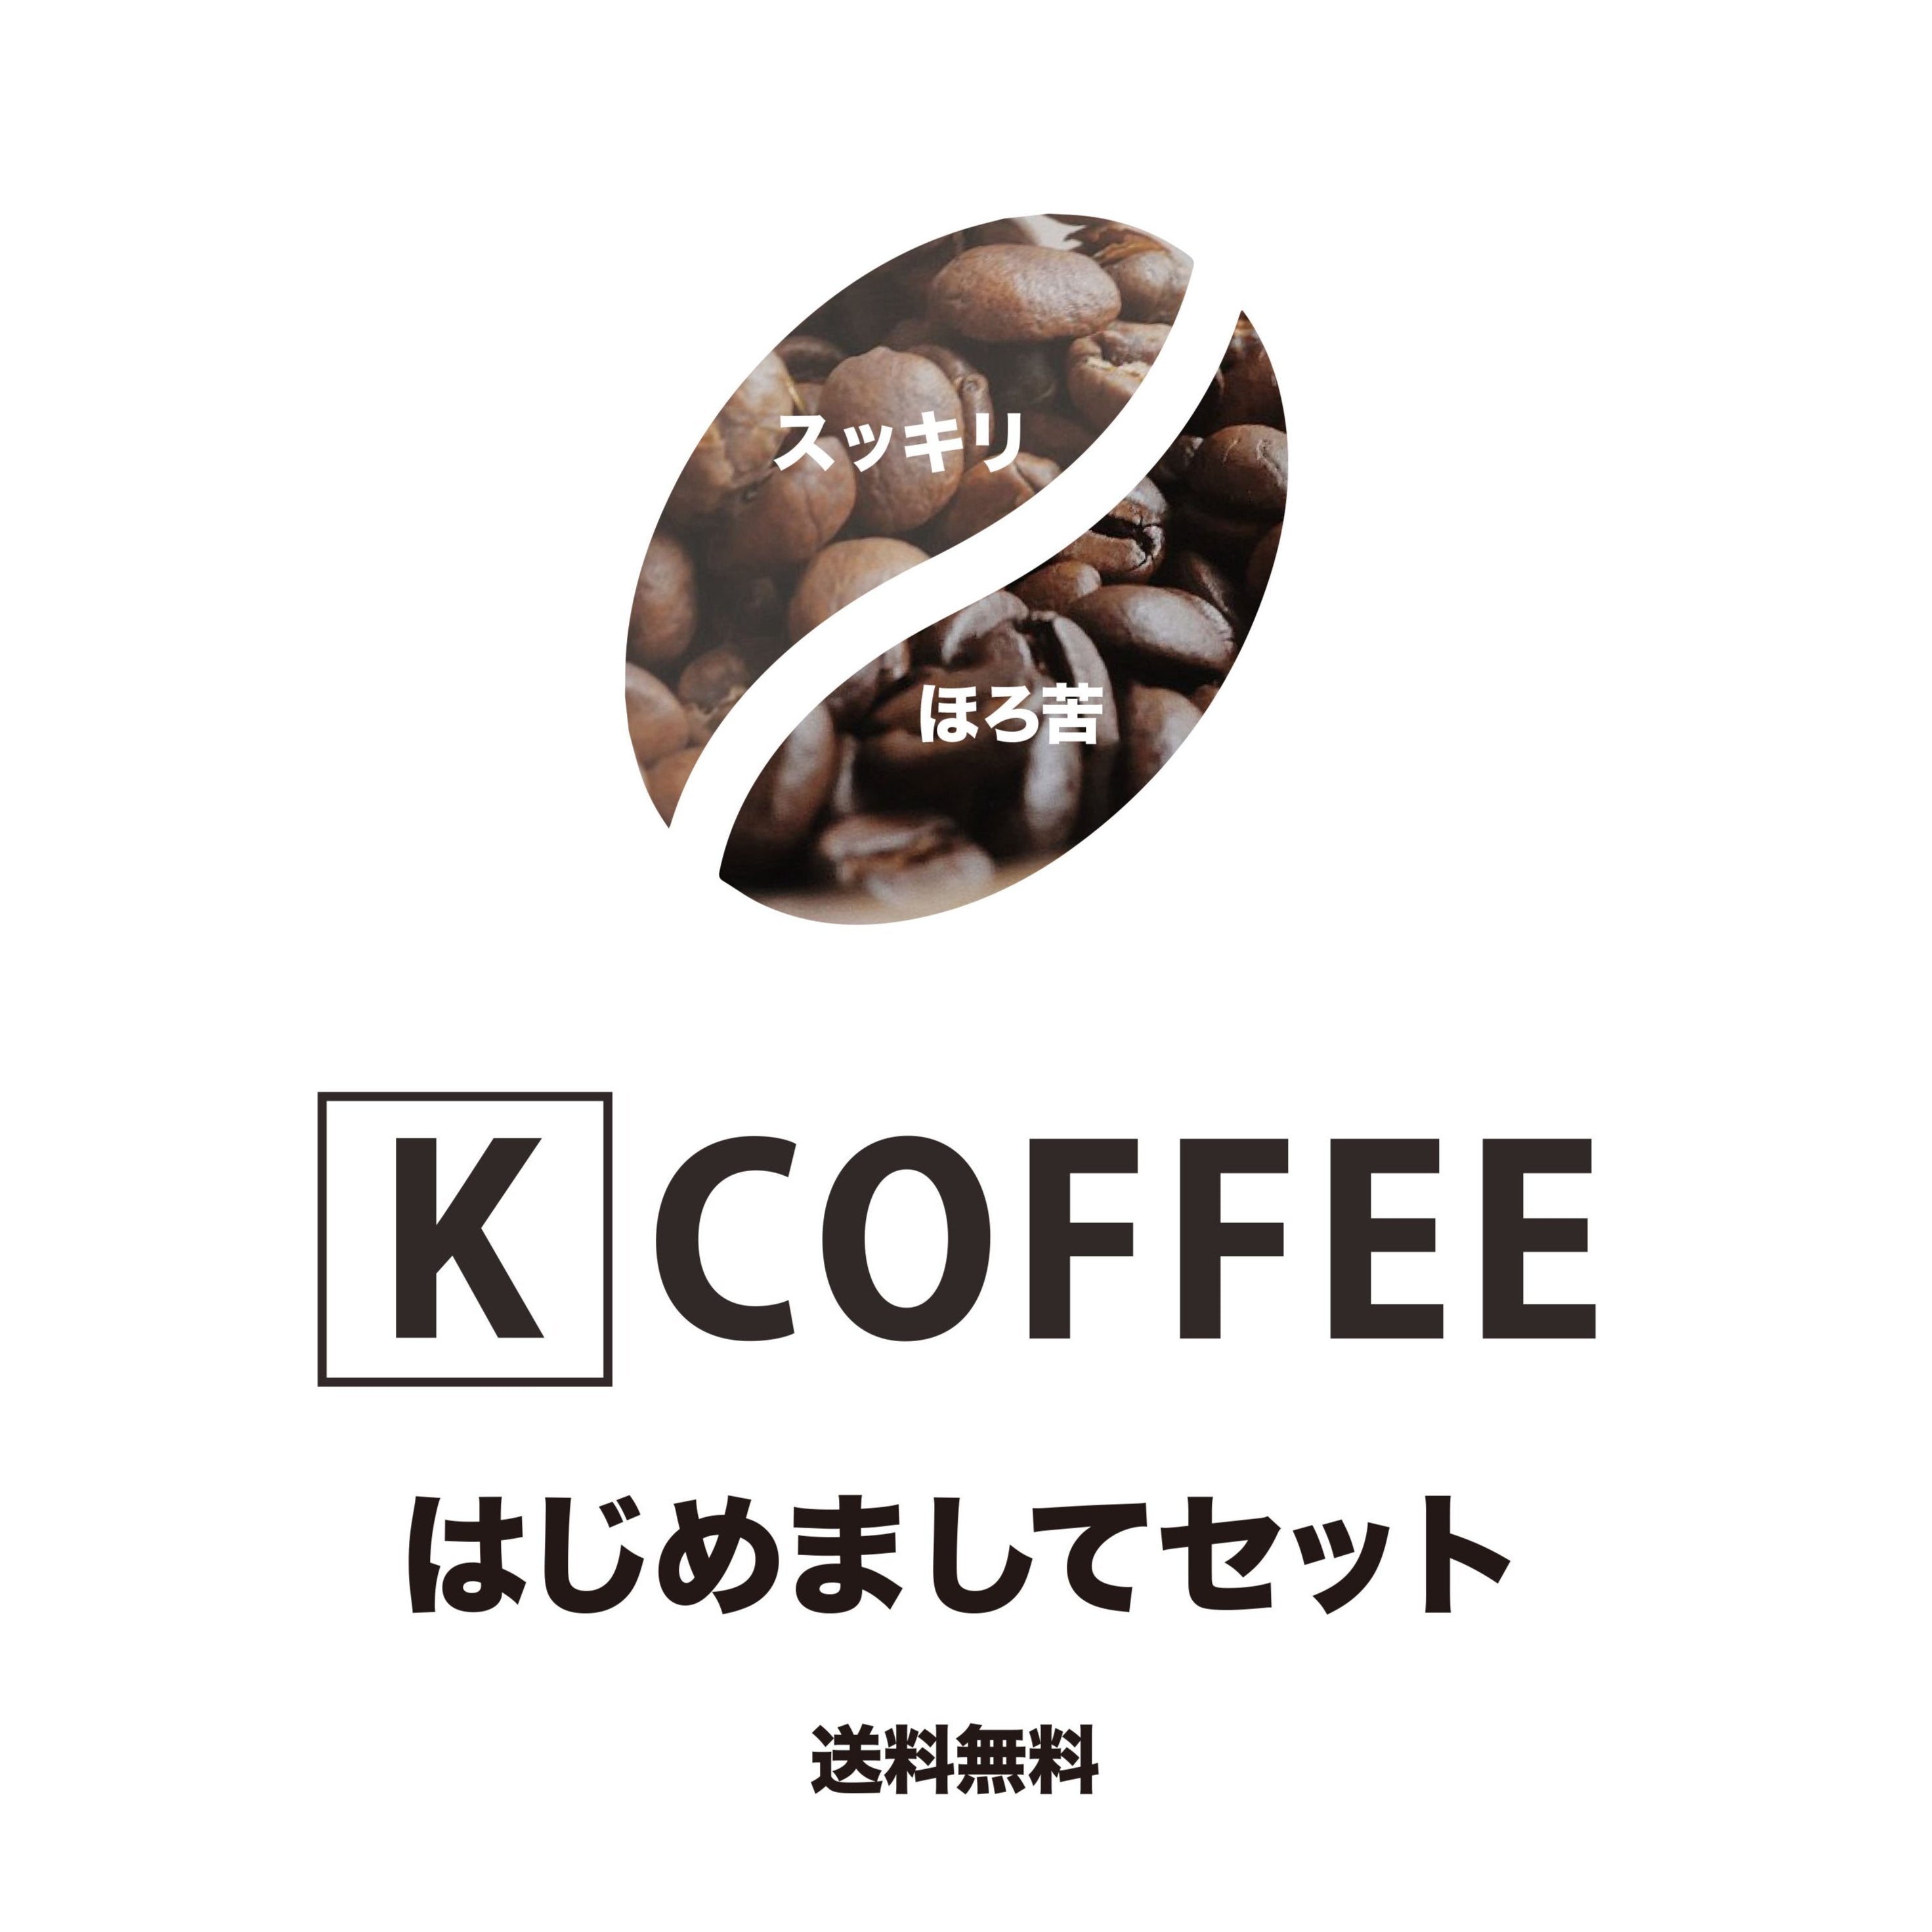 K COFFEEはじめましてセット